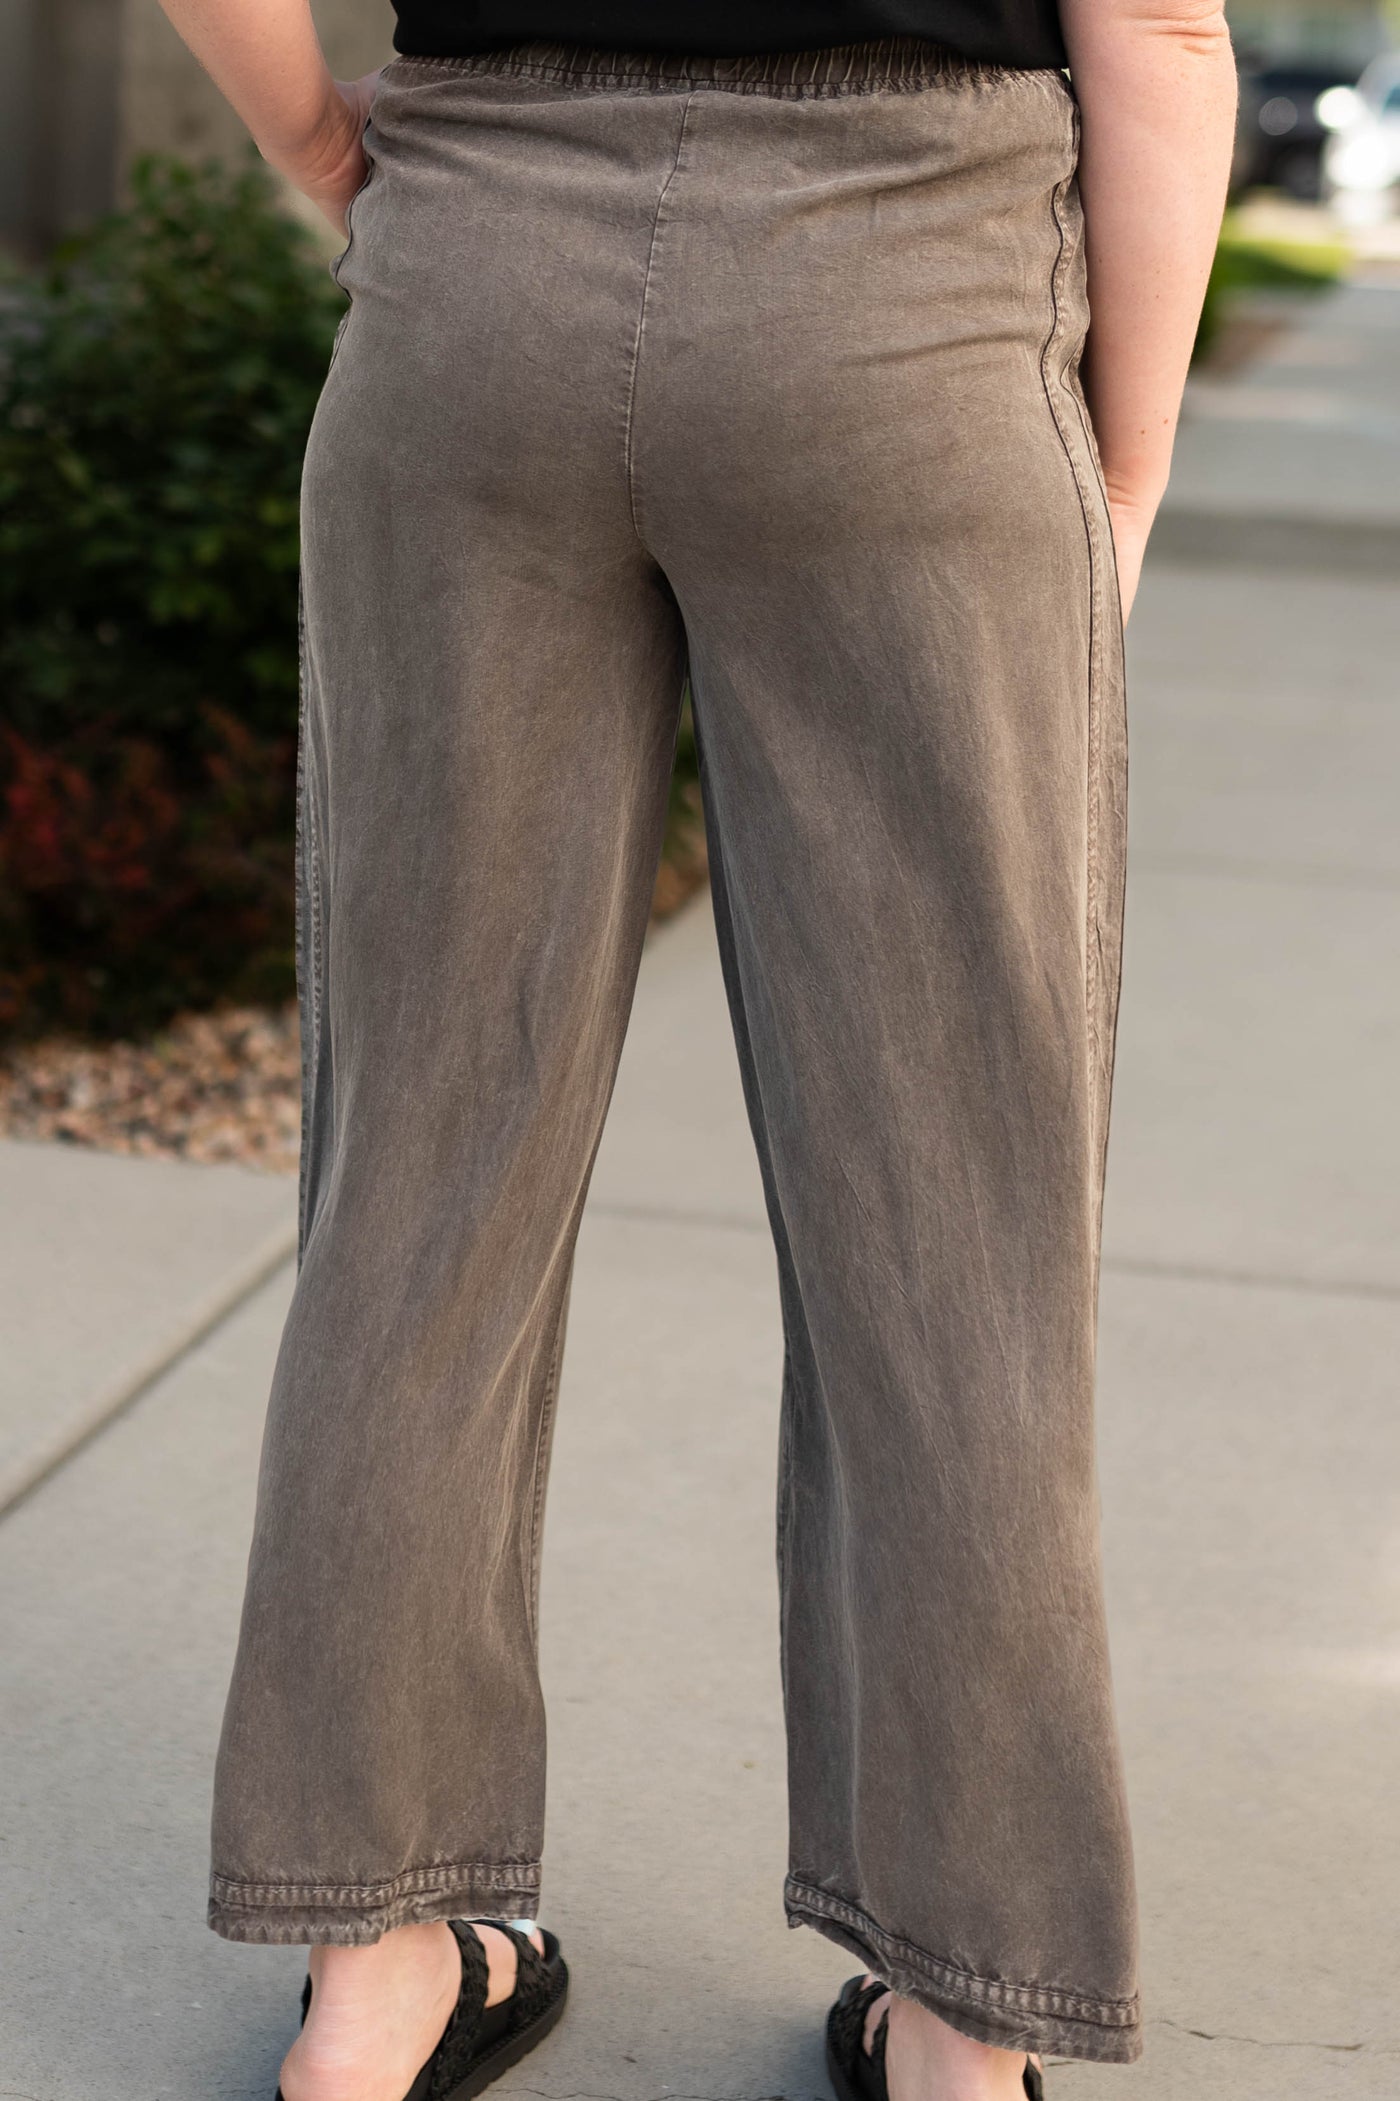 Back view of ash pants